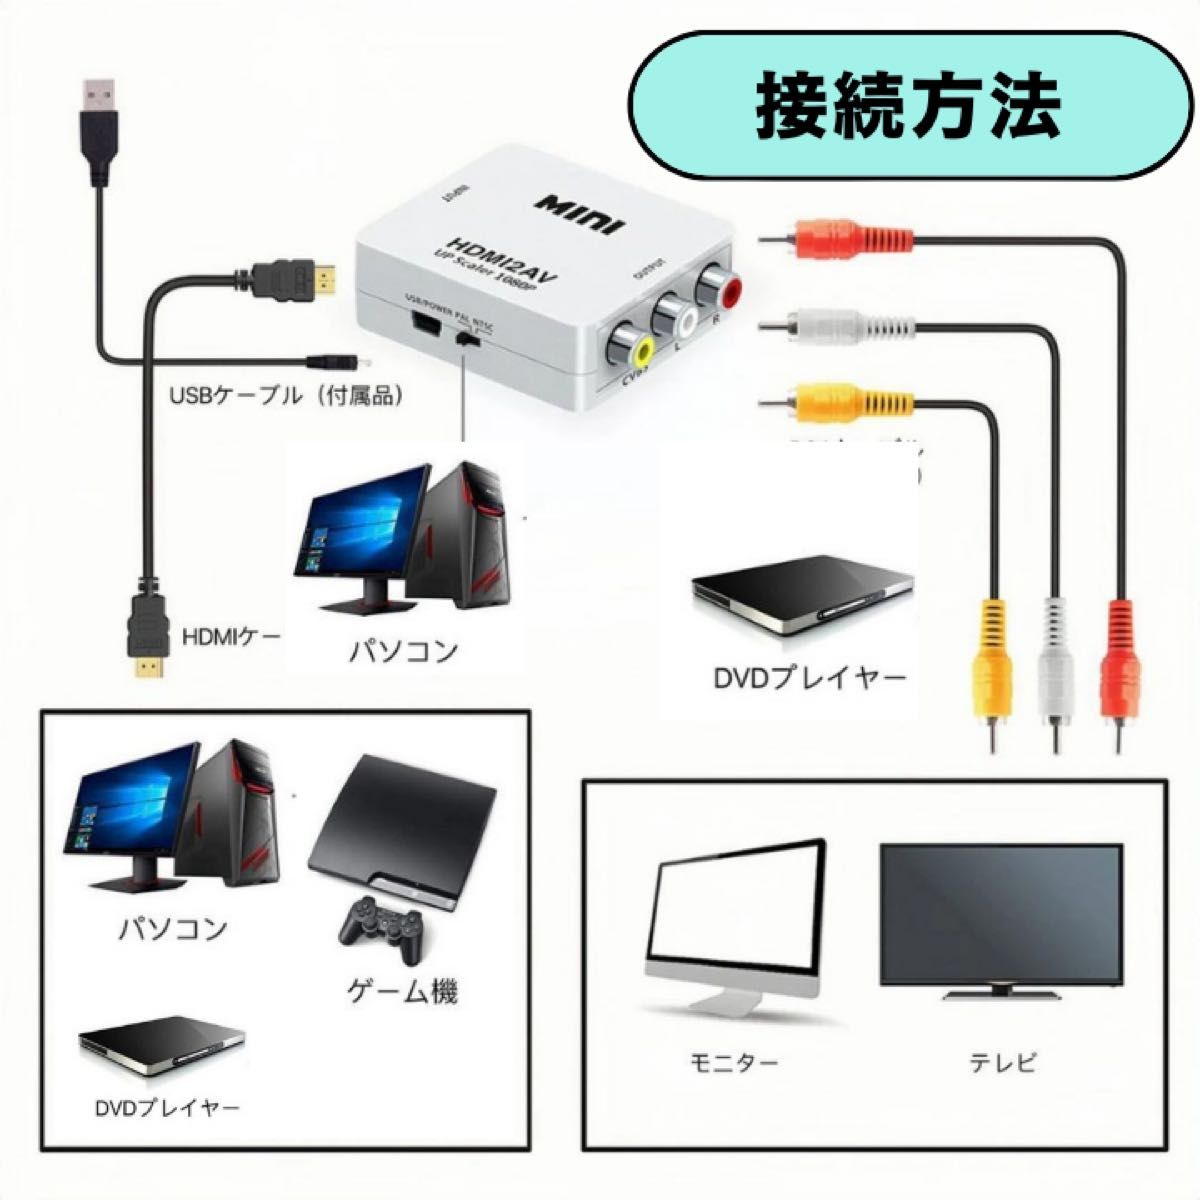 HDMI to RCA 変換アダプタ RCA変換アダプタ コンポジット アダプター コンバーター AV 